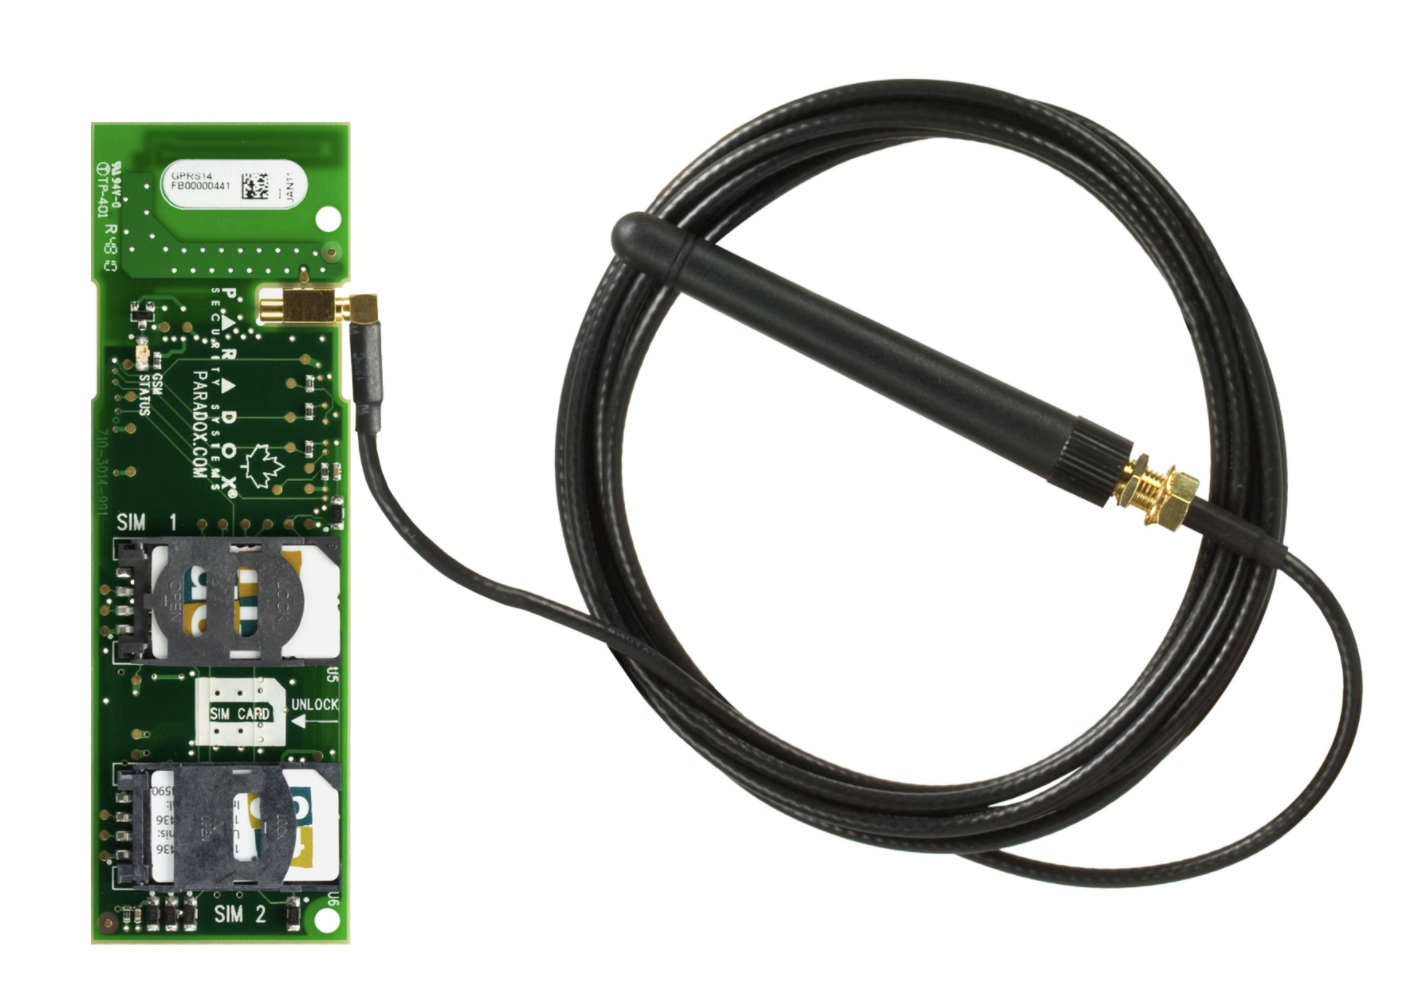 GPRS14 Plug-in Communicator Module